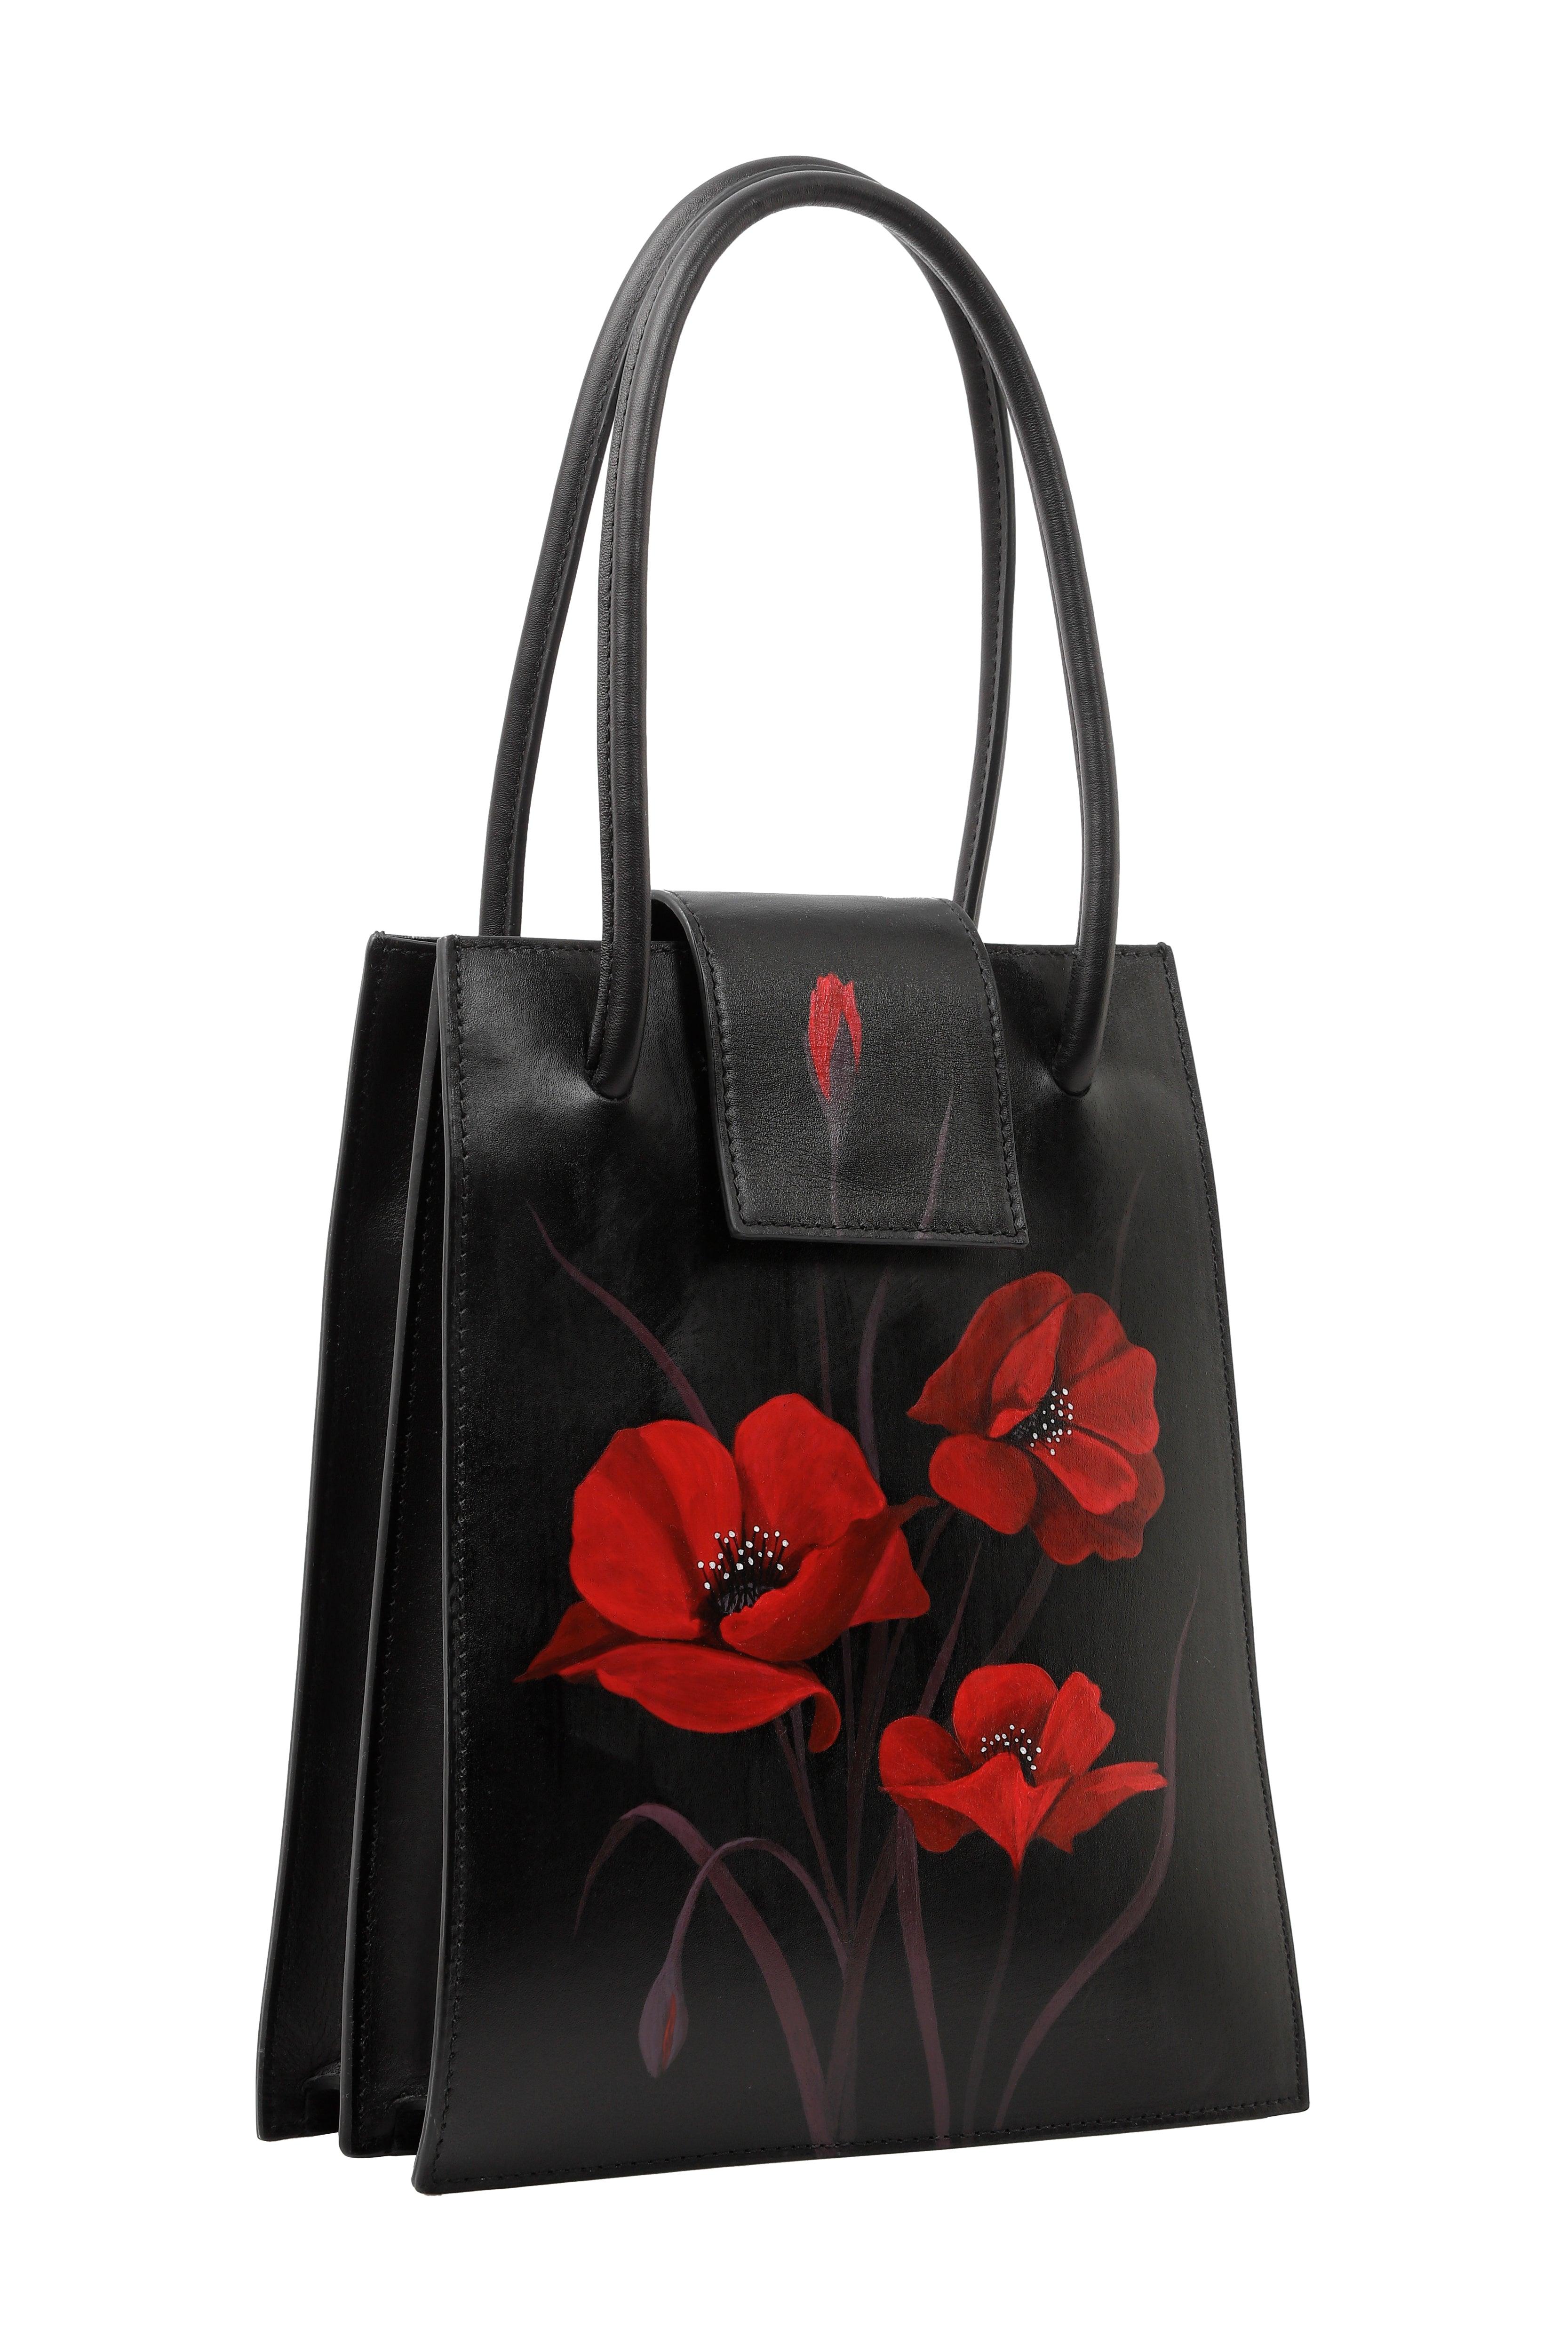 Whispering Poppies - Black Leather Handle Bag - AnatolianCraft